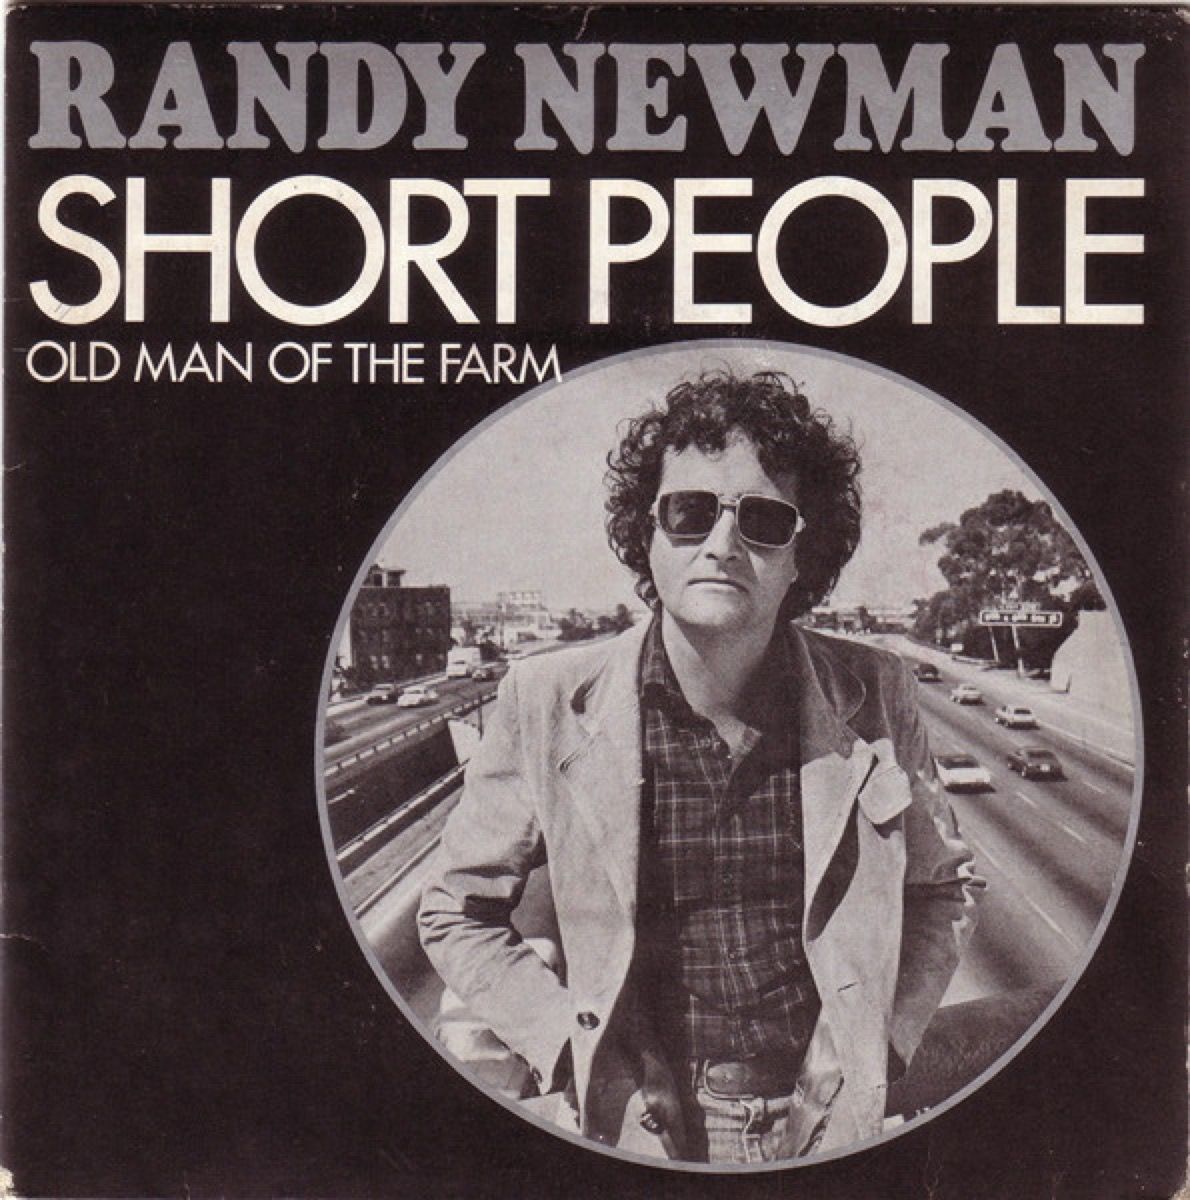 naslovnica albuma za Randyja Newmana